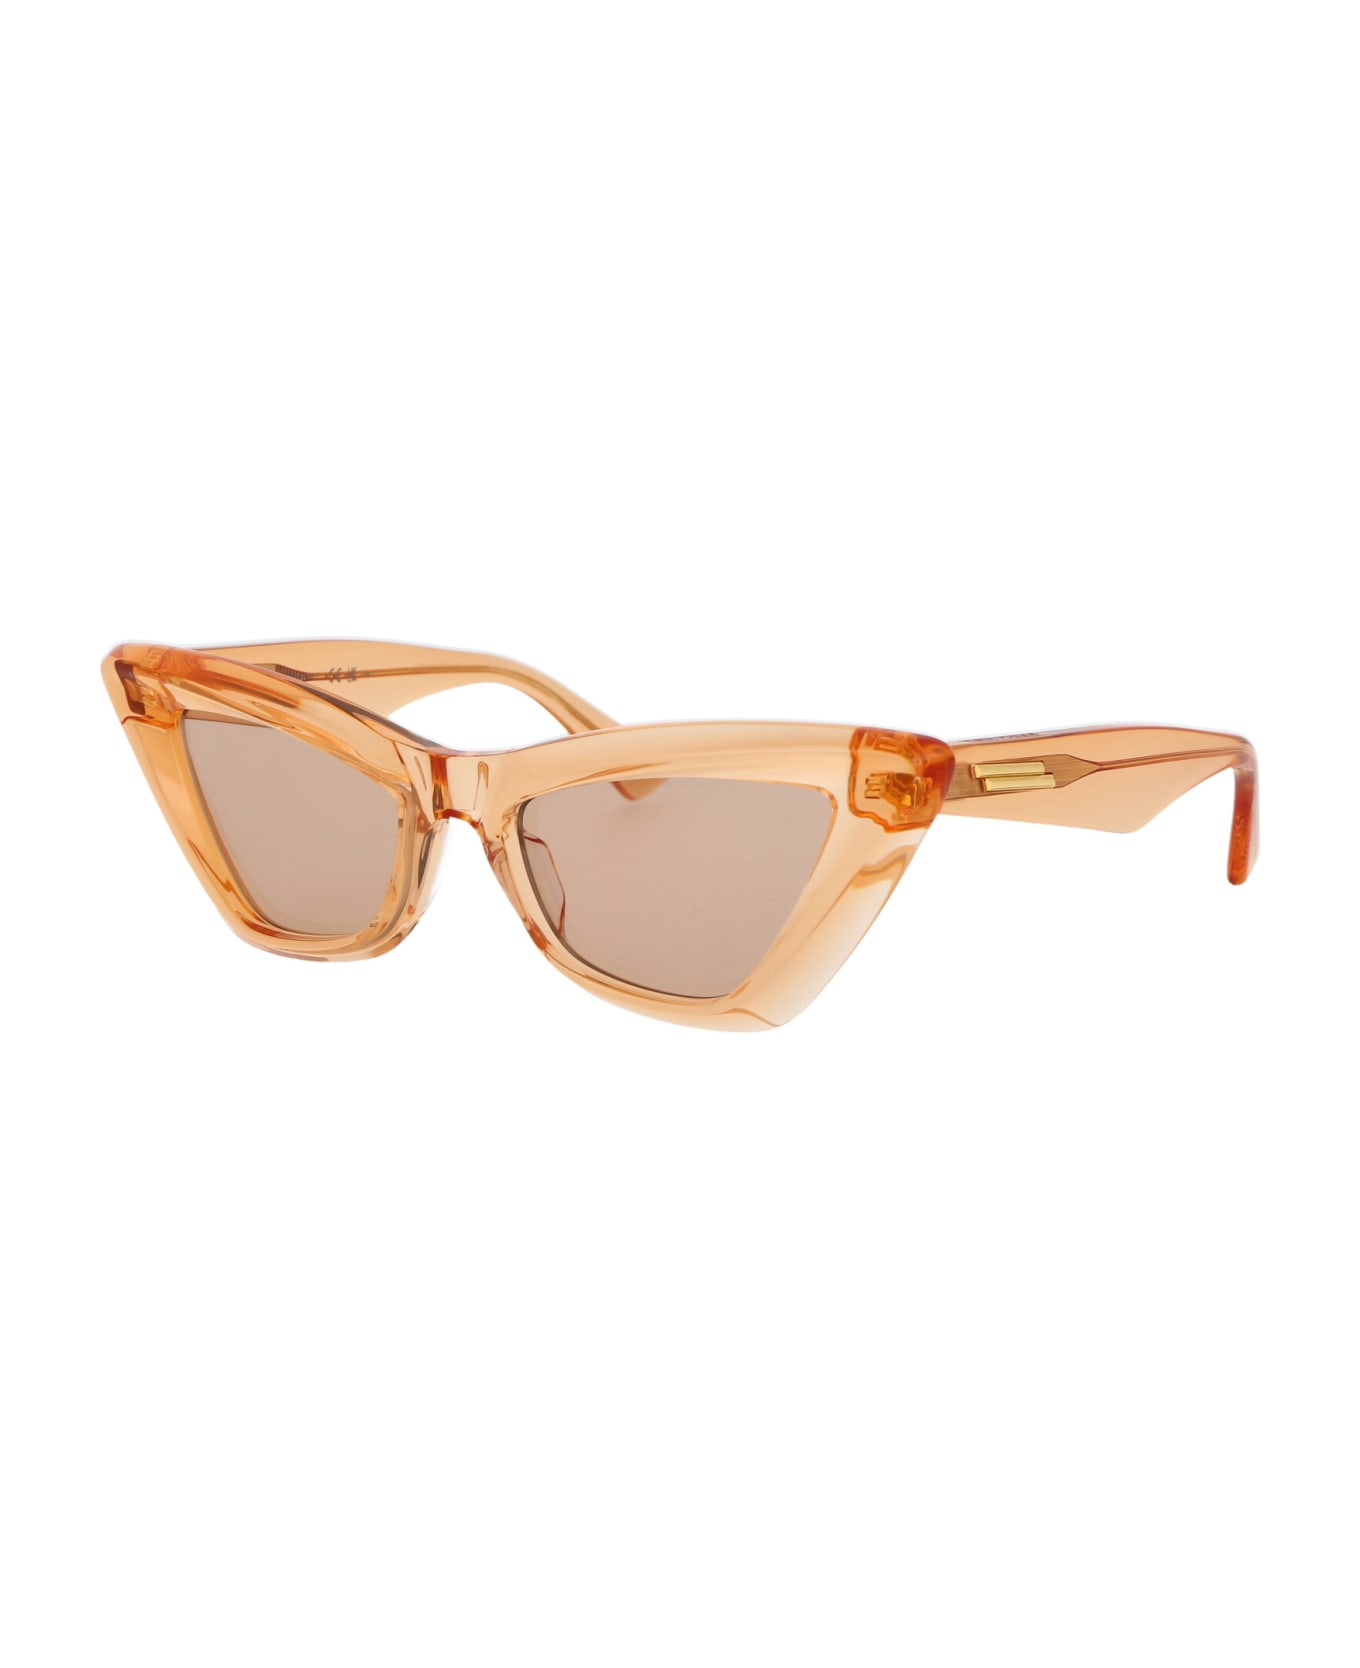 Bottega Veneta Eyewear Bv1101s Sunglasses - 011 ORANGE ORANGE BROWN サングラス